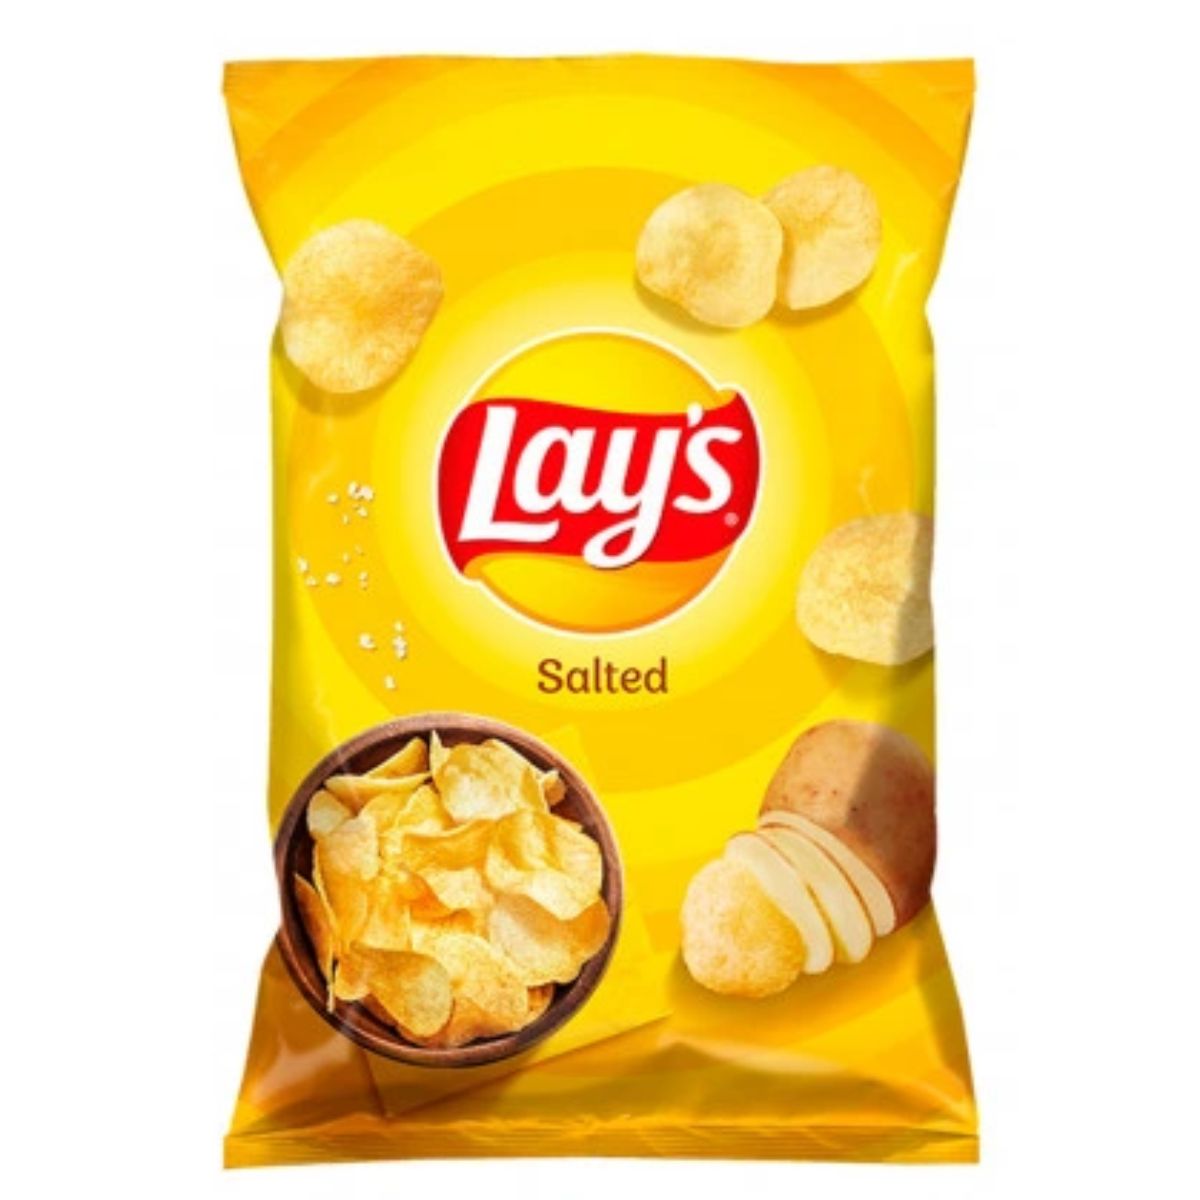 Lay's salted potato crisps - 130g.